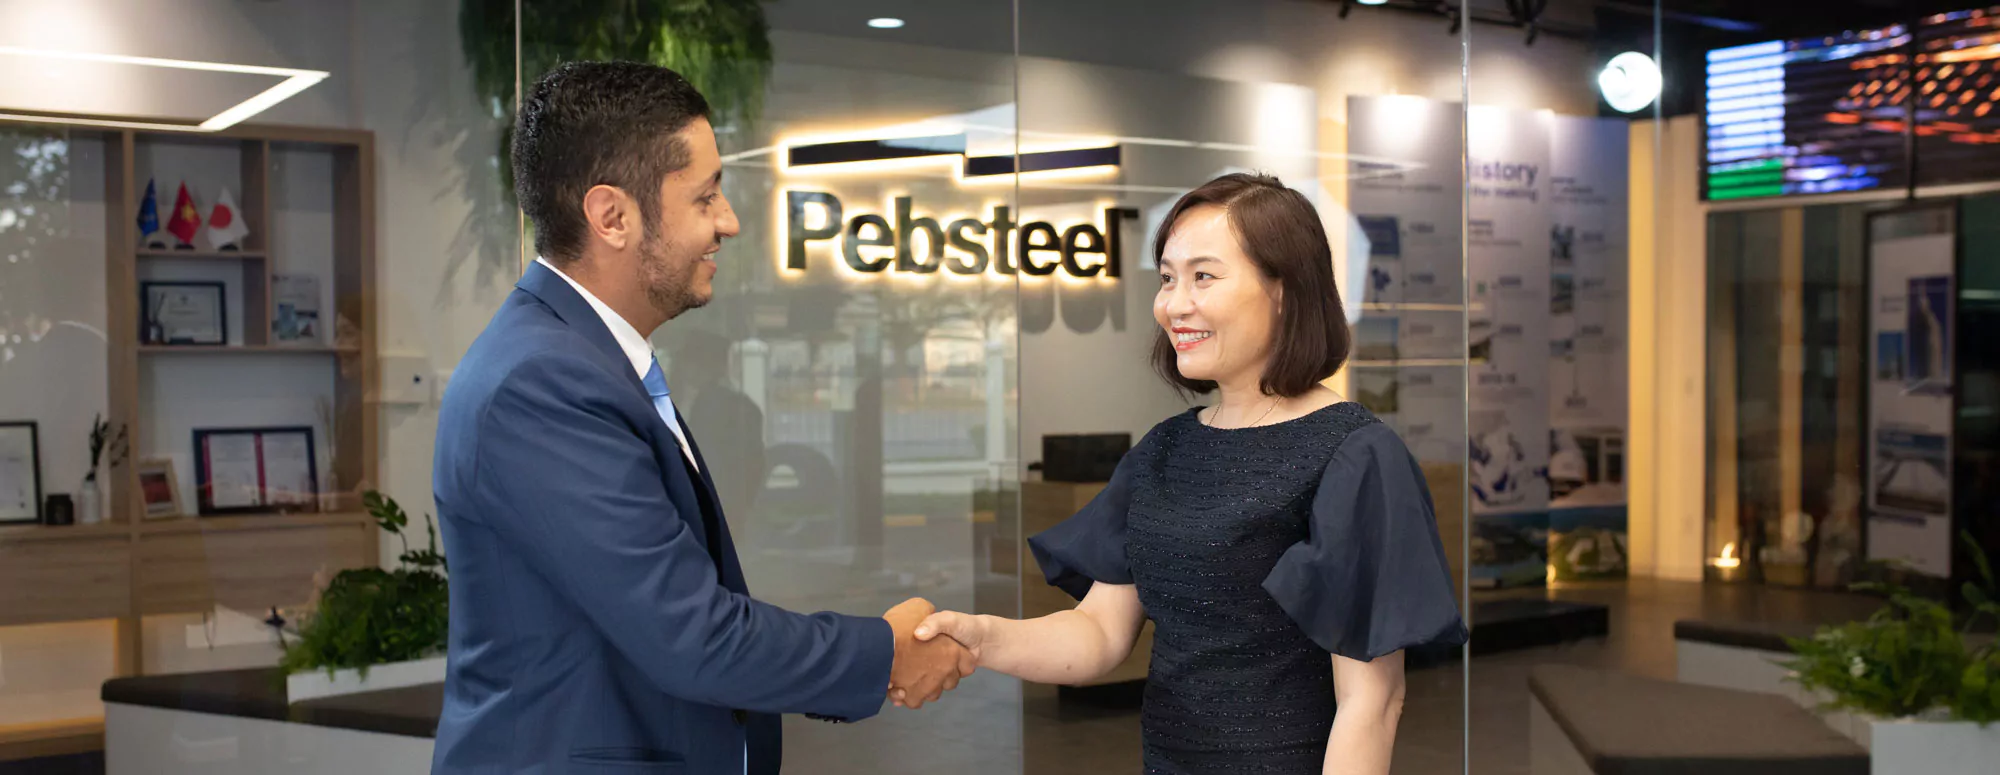 Build your career with Pebsteel